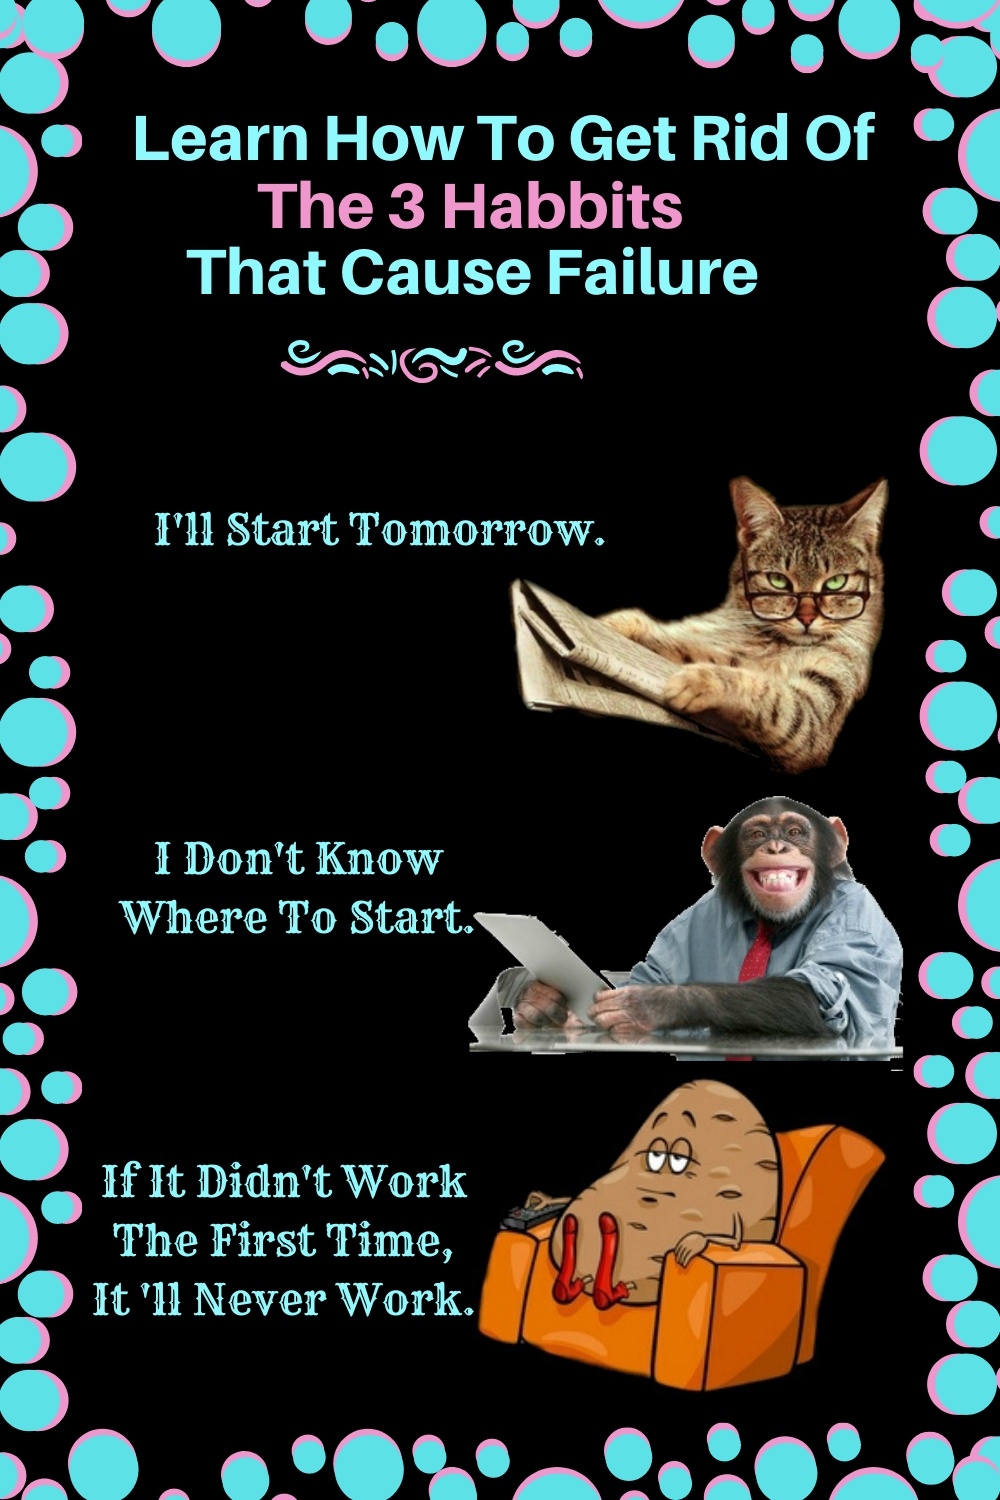 Success vs Failure